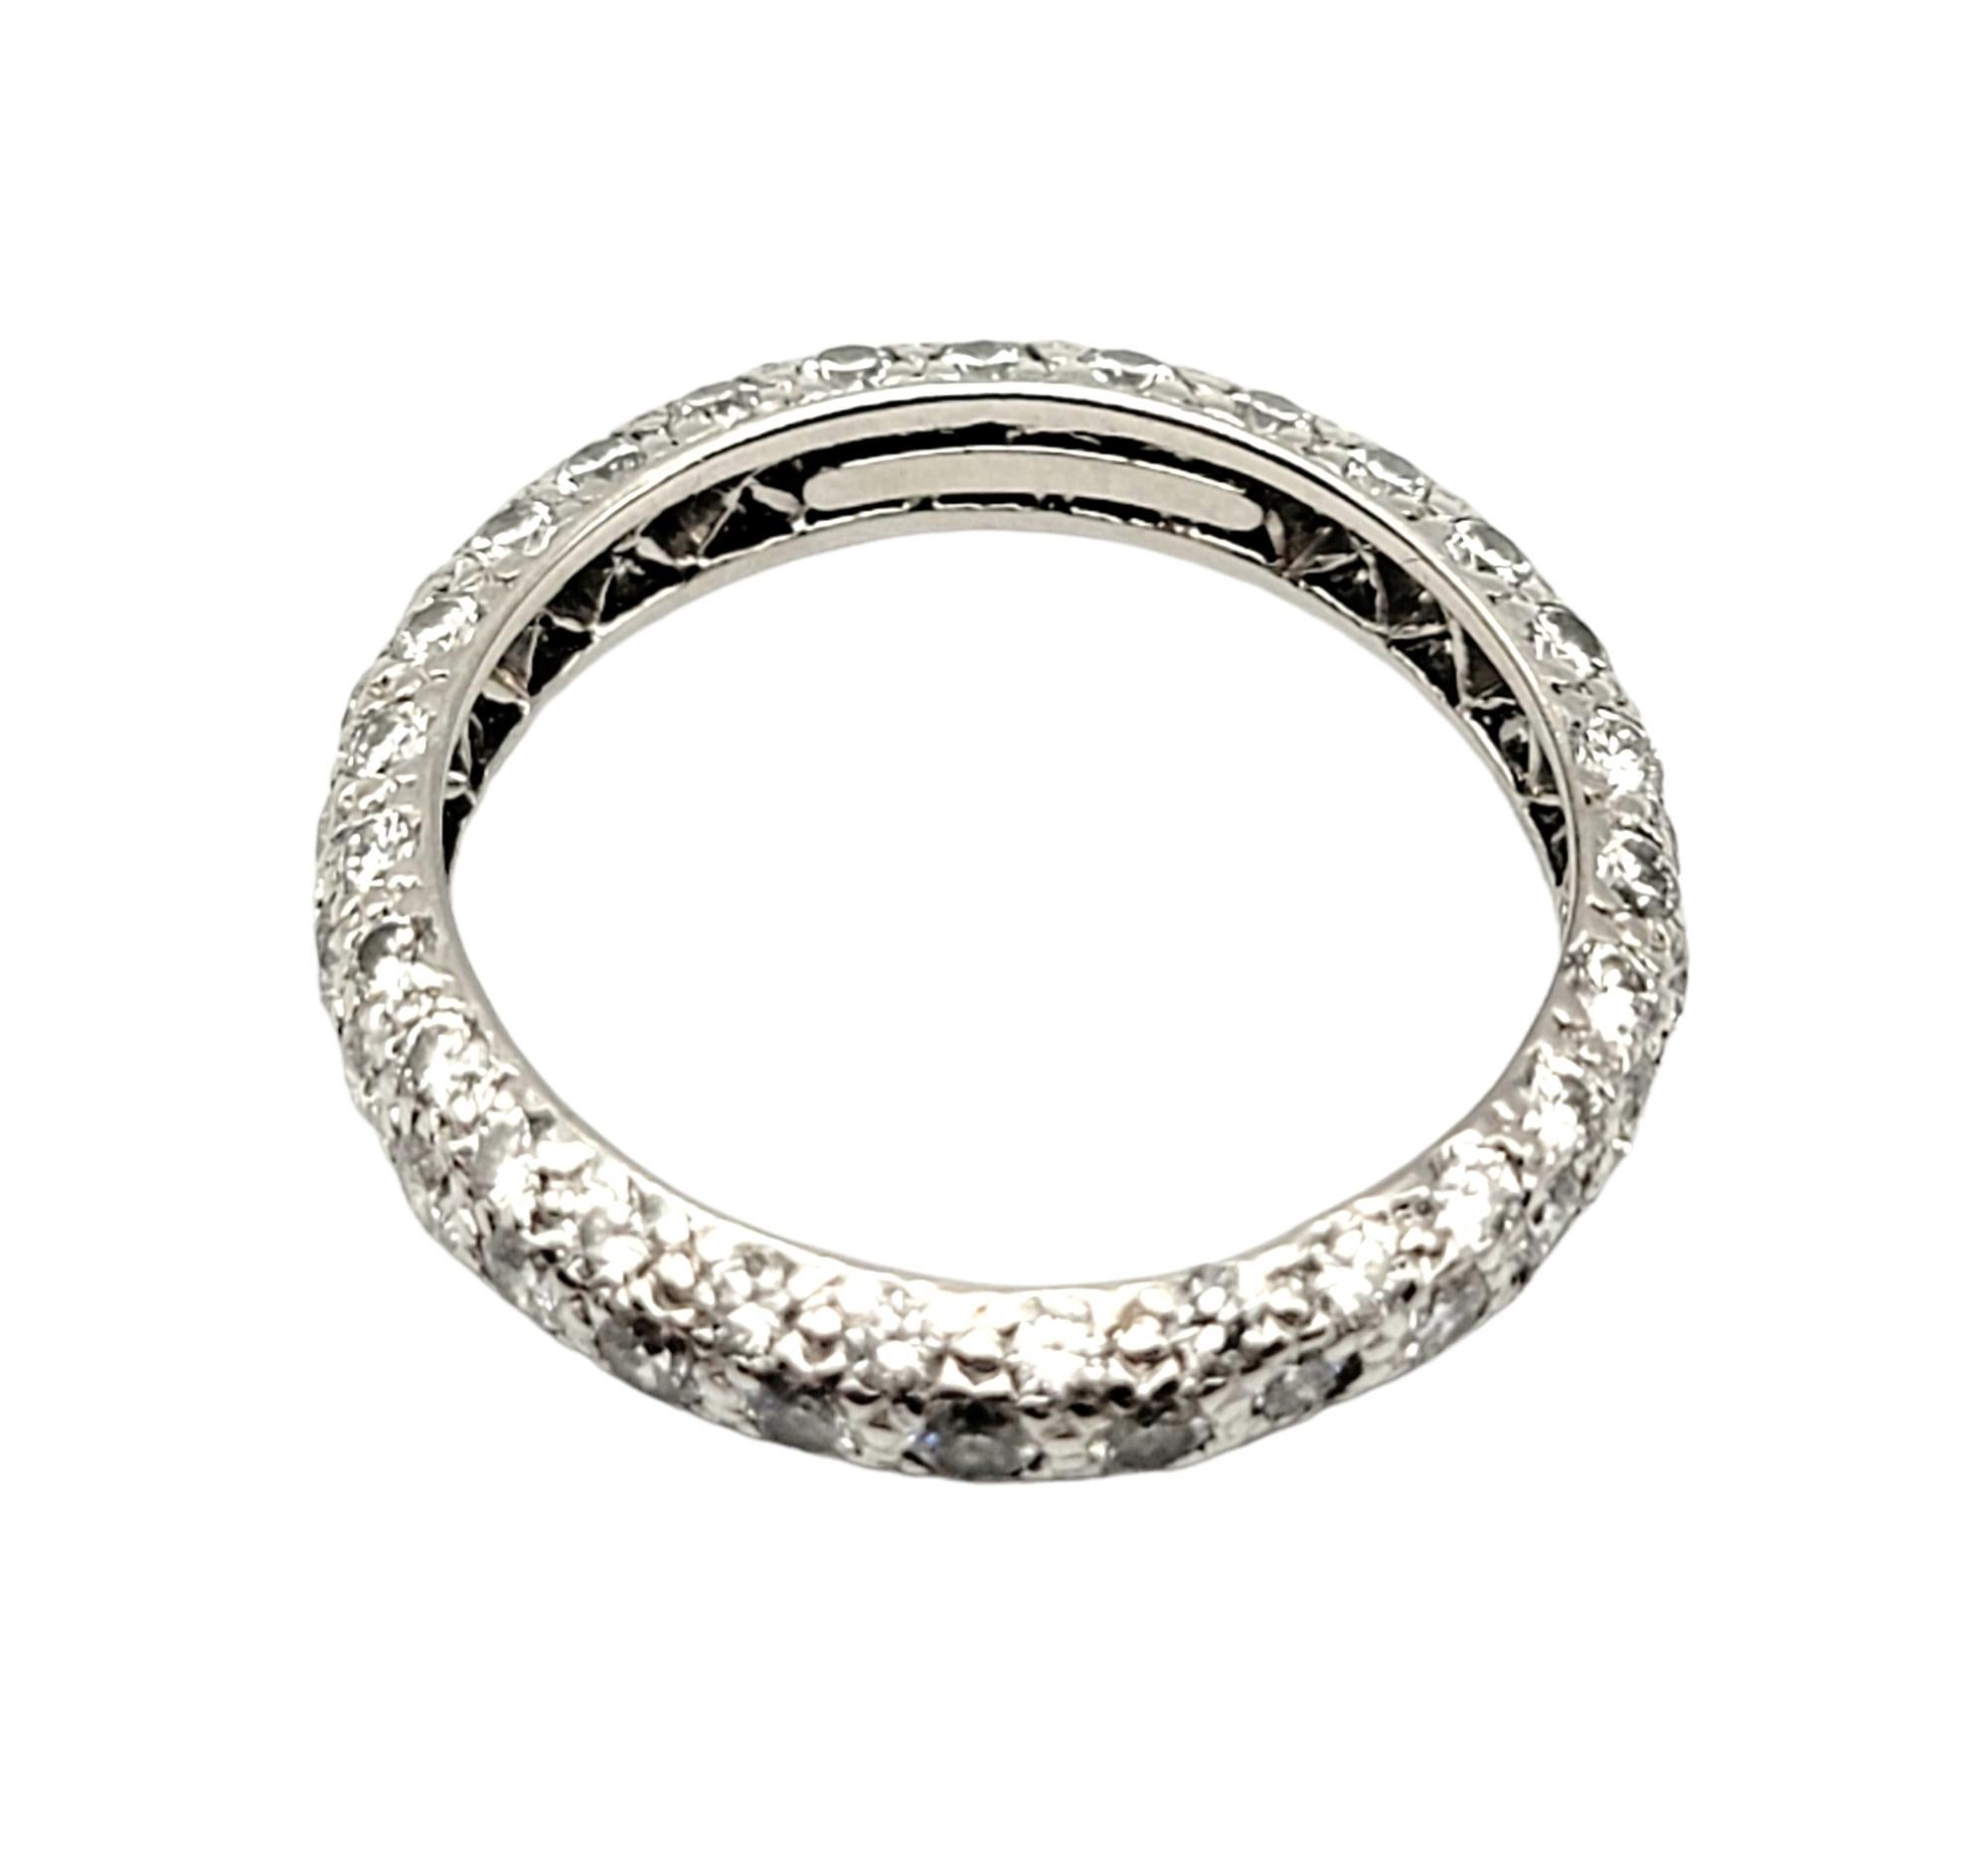 Tiffany & Co. Etoile Pave Diamond Eternity Band Ring Platinum 1.76 Carats Total 2